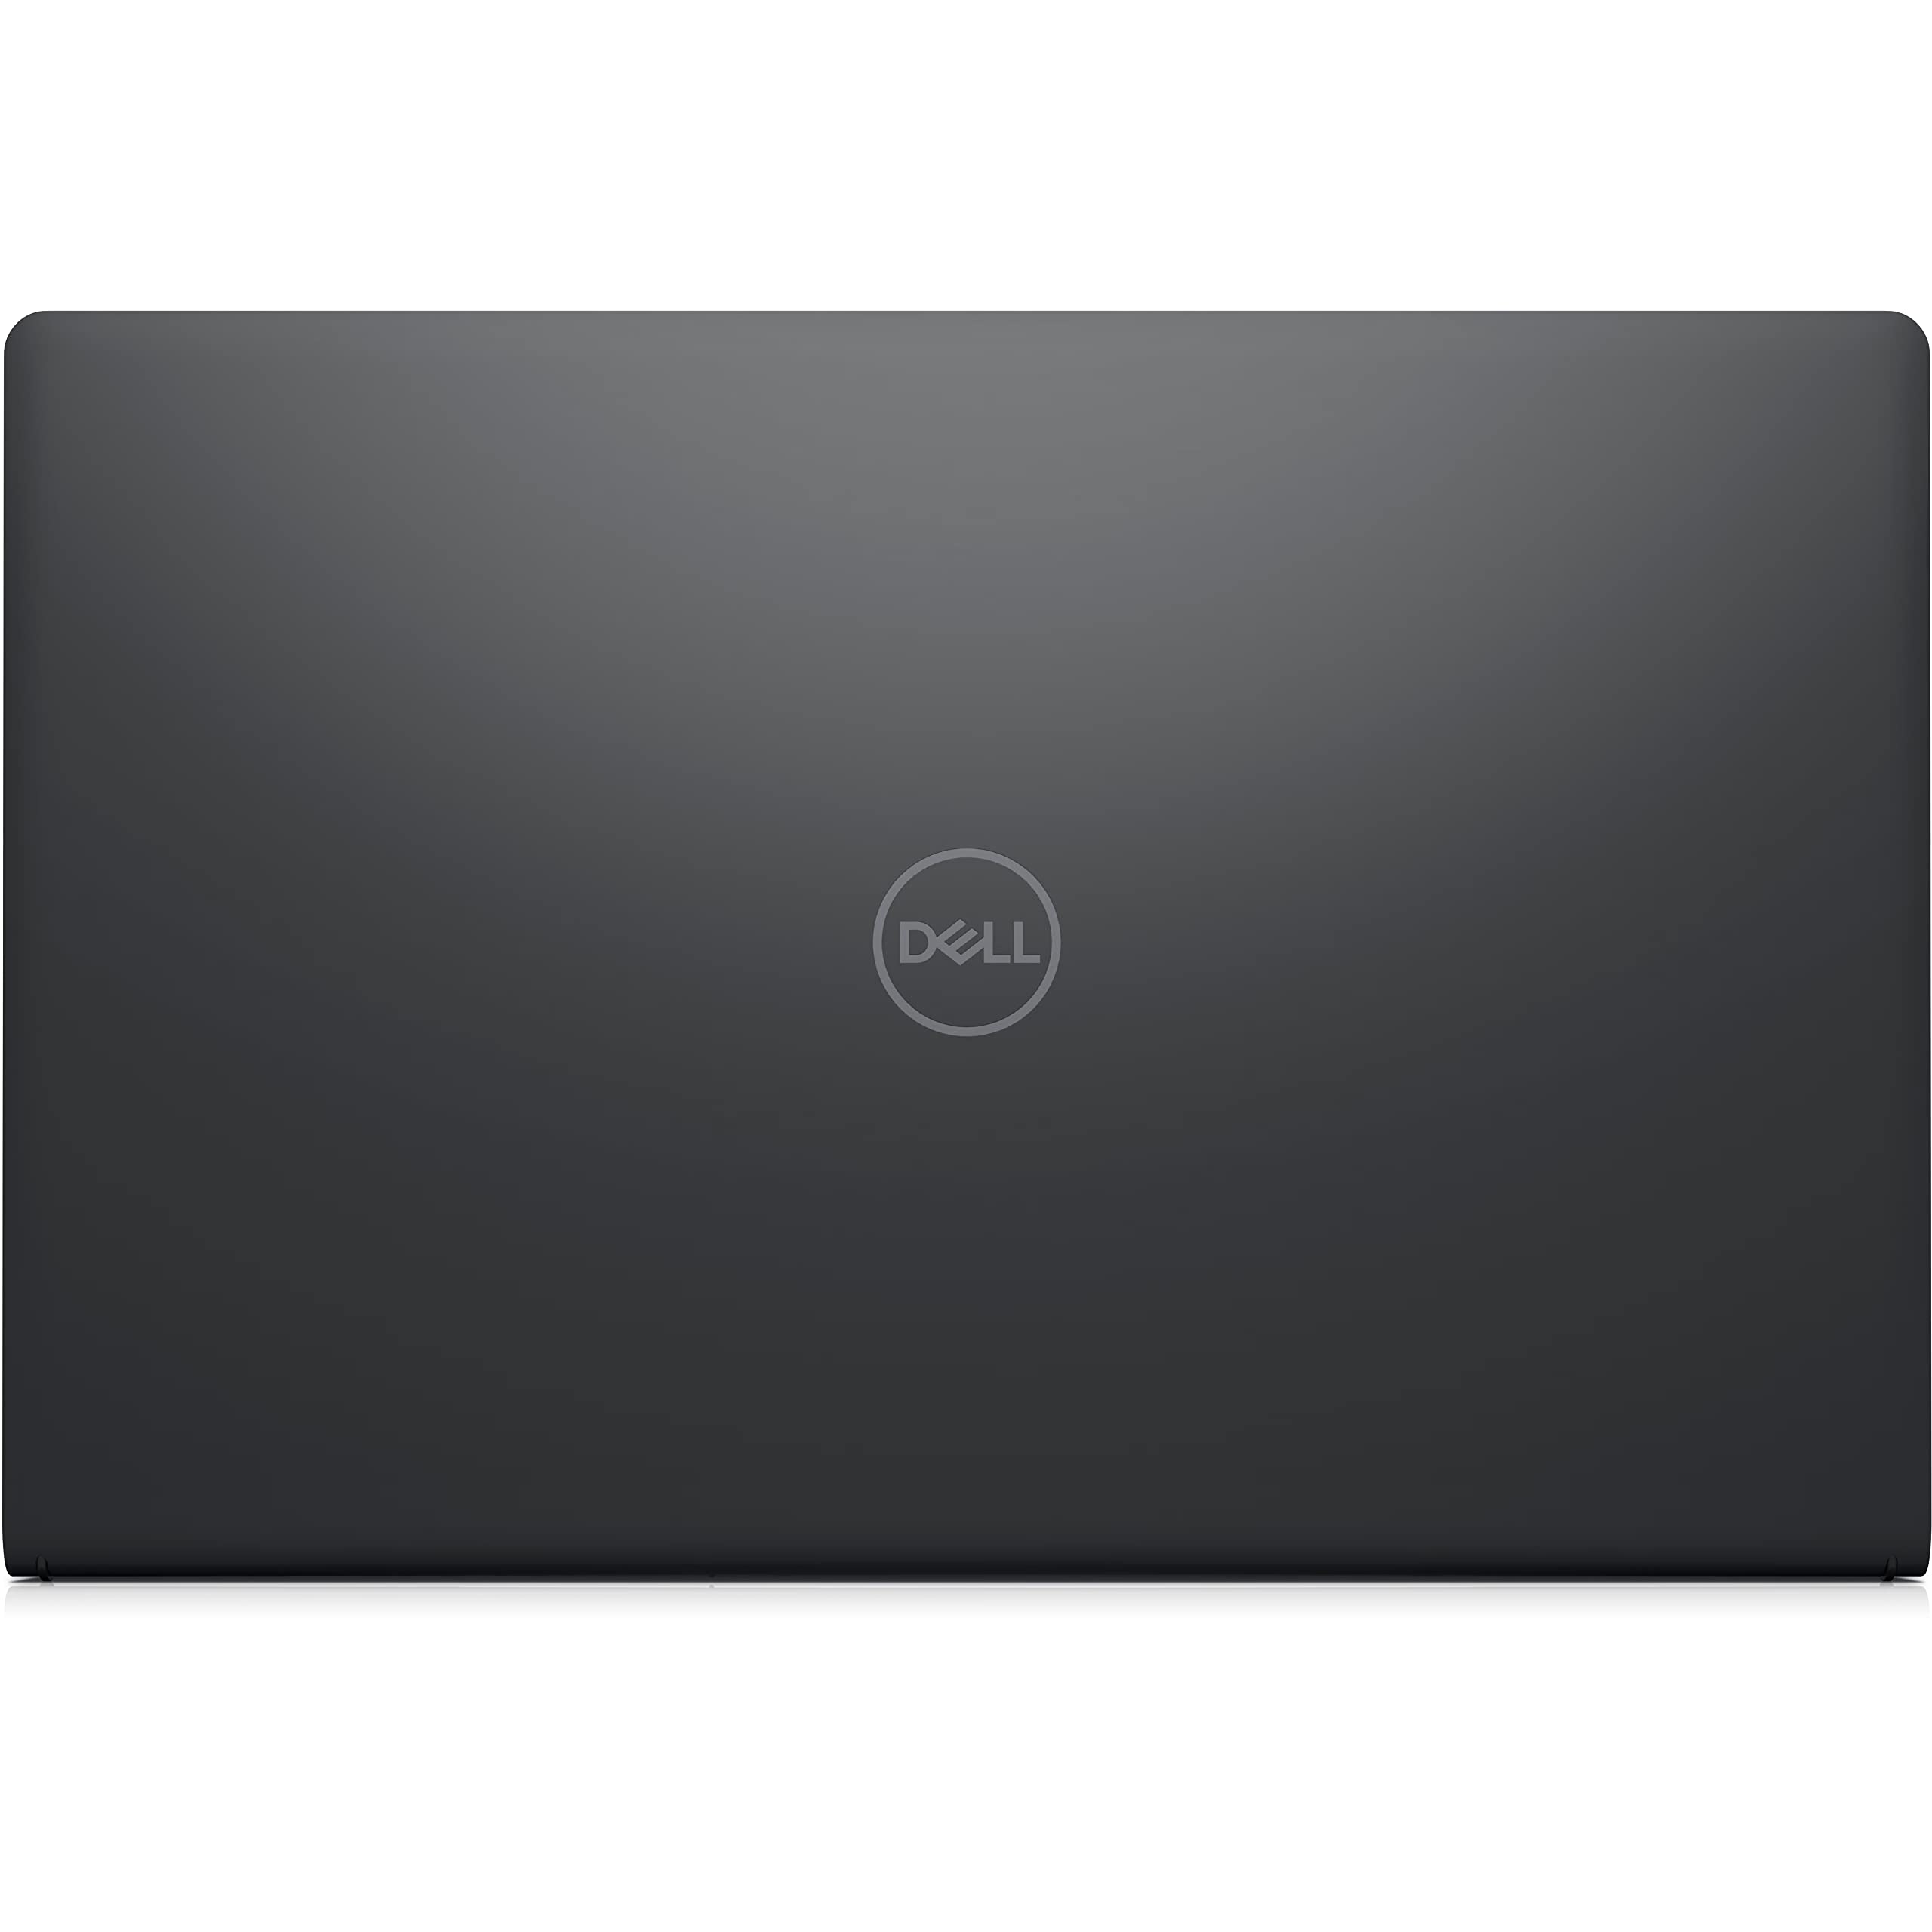 Dell Inspiron 15 3000 3520 15.6" FHD Touchscreen Business Laptop Computer, Intel Core i5-1135G7 (Beat i7-1065G7), 16GB DDR4 RAM, 1TB PCIe SSD, 802.11AC WiFi, Bluetooth, Windows 11 Pro